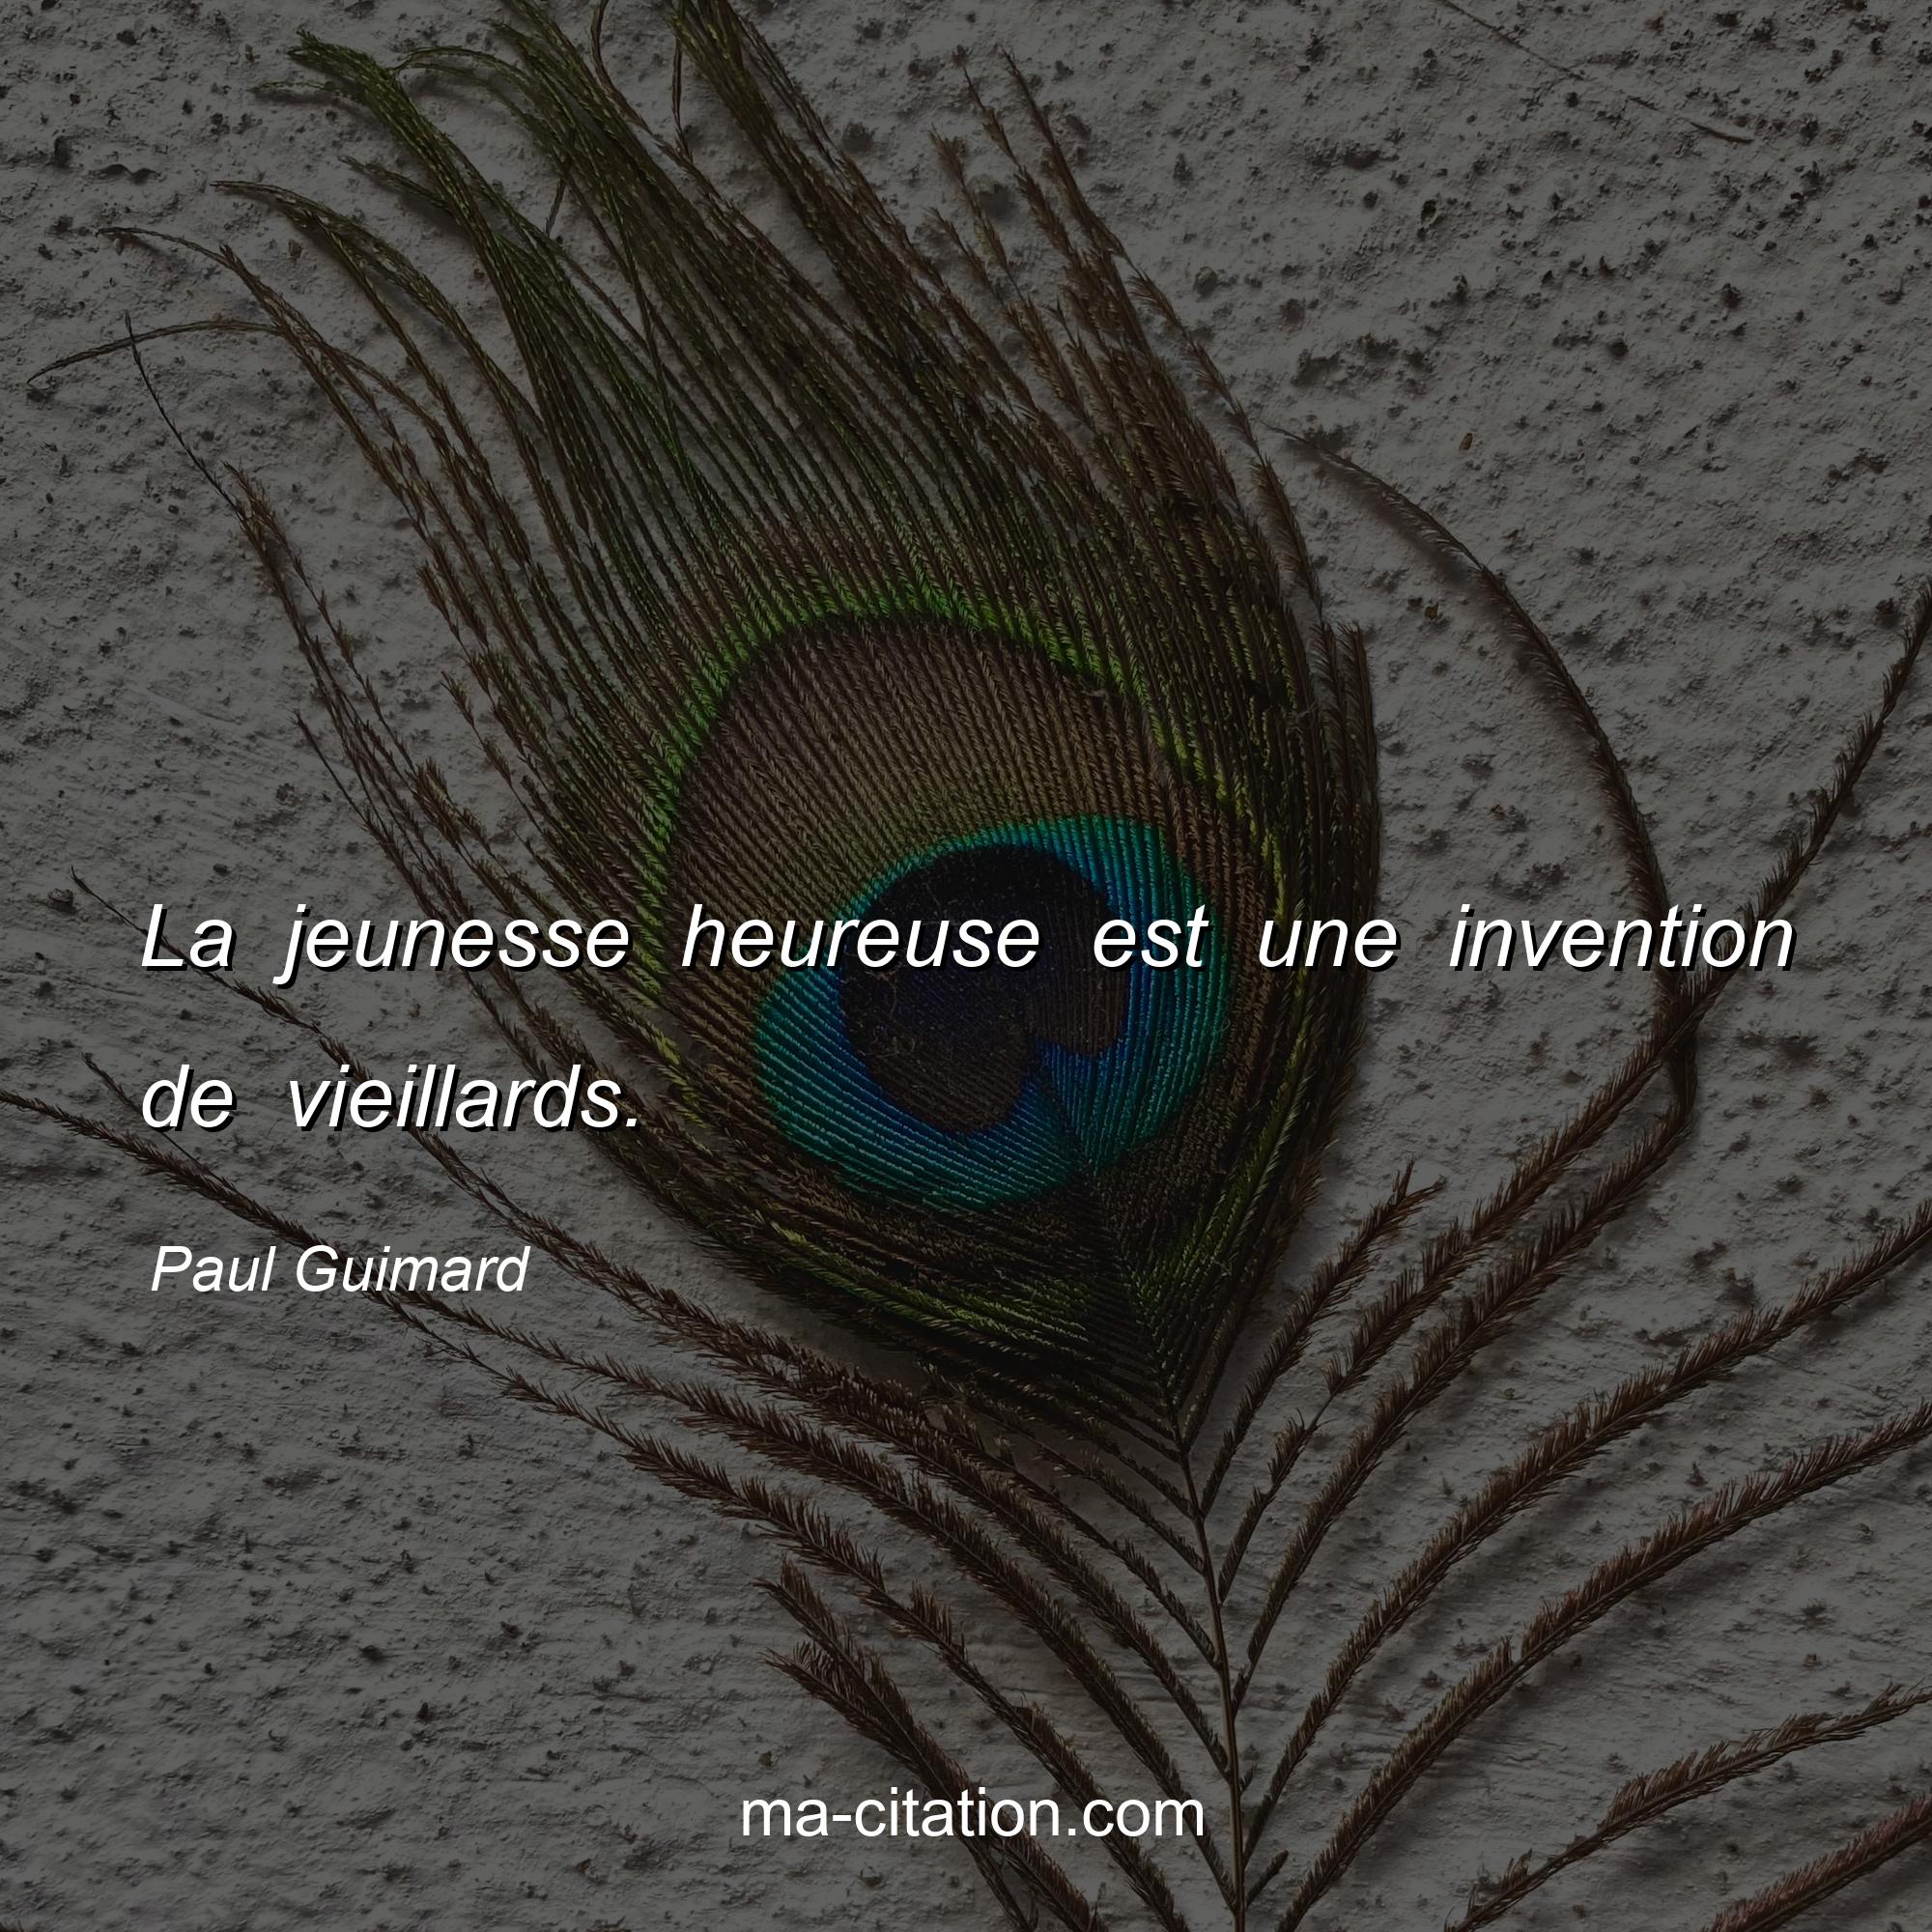 Paul Guimard : La jeunesse heureuse est une invention de vieillards.